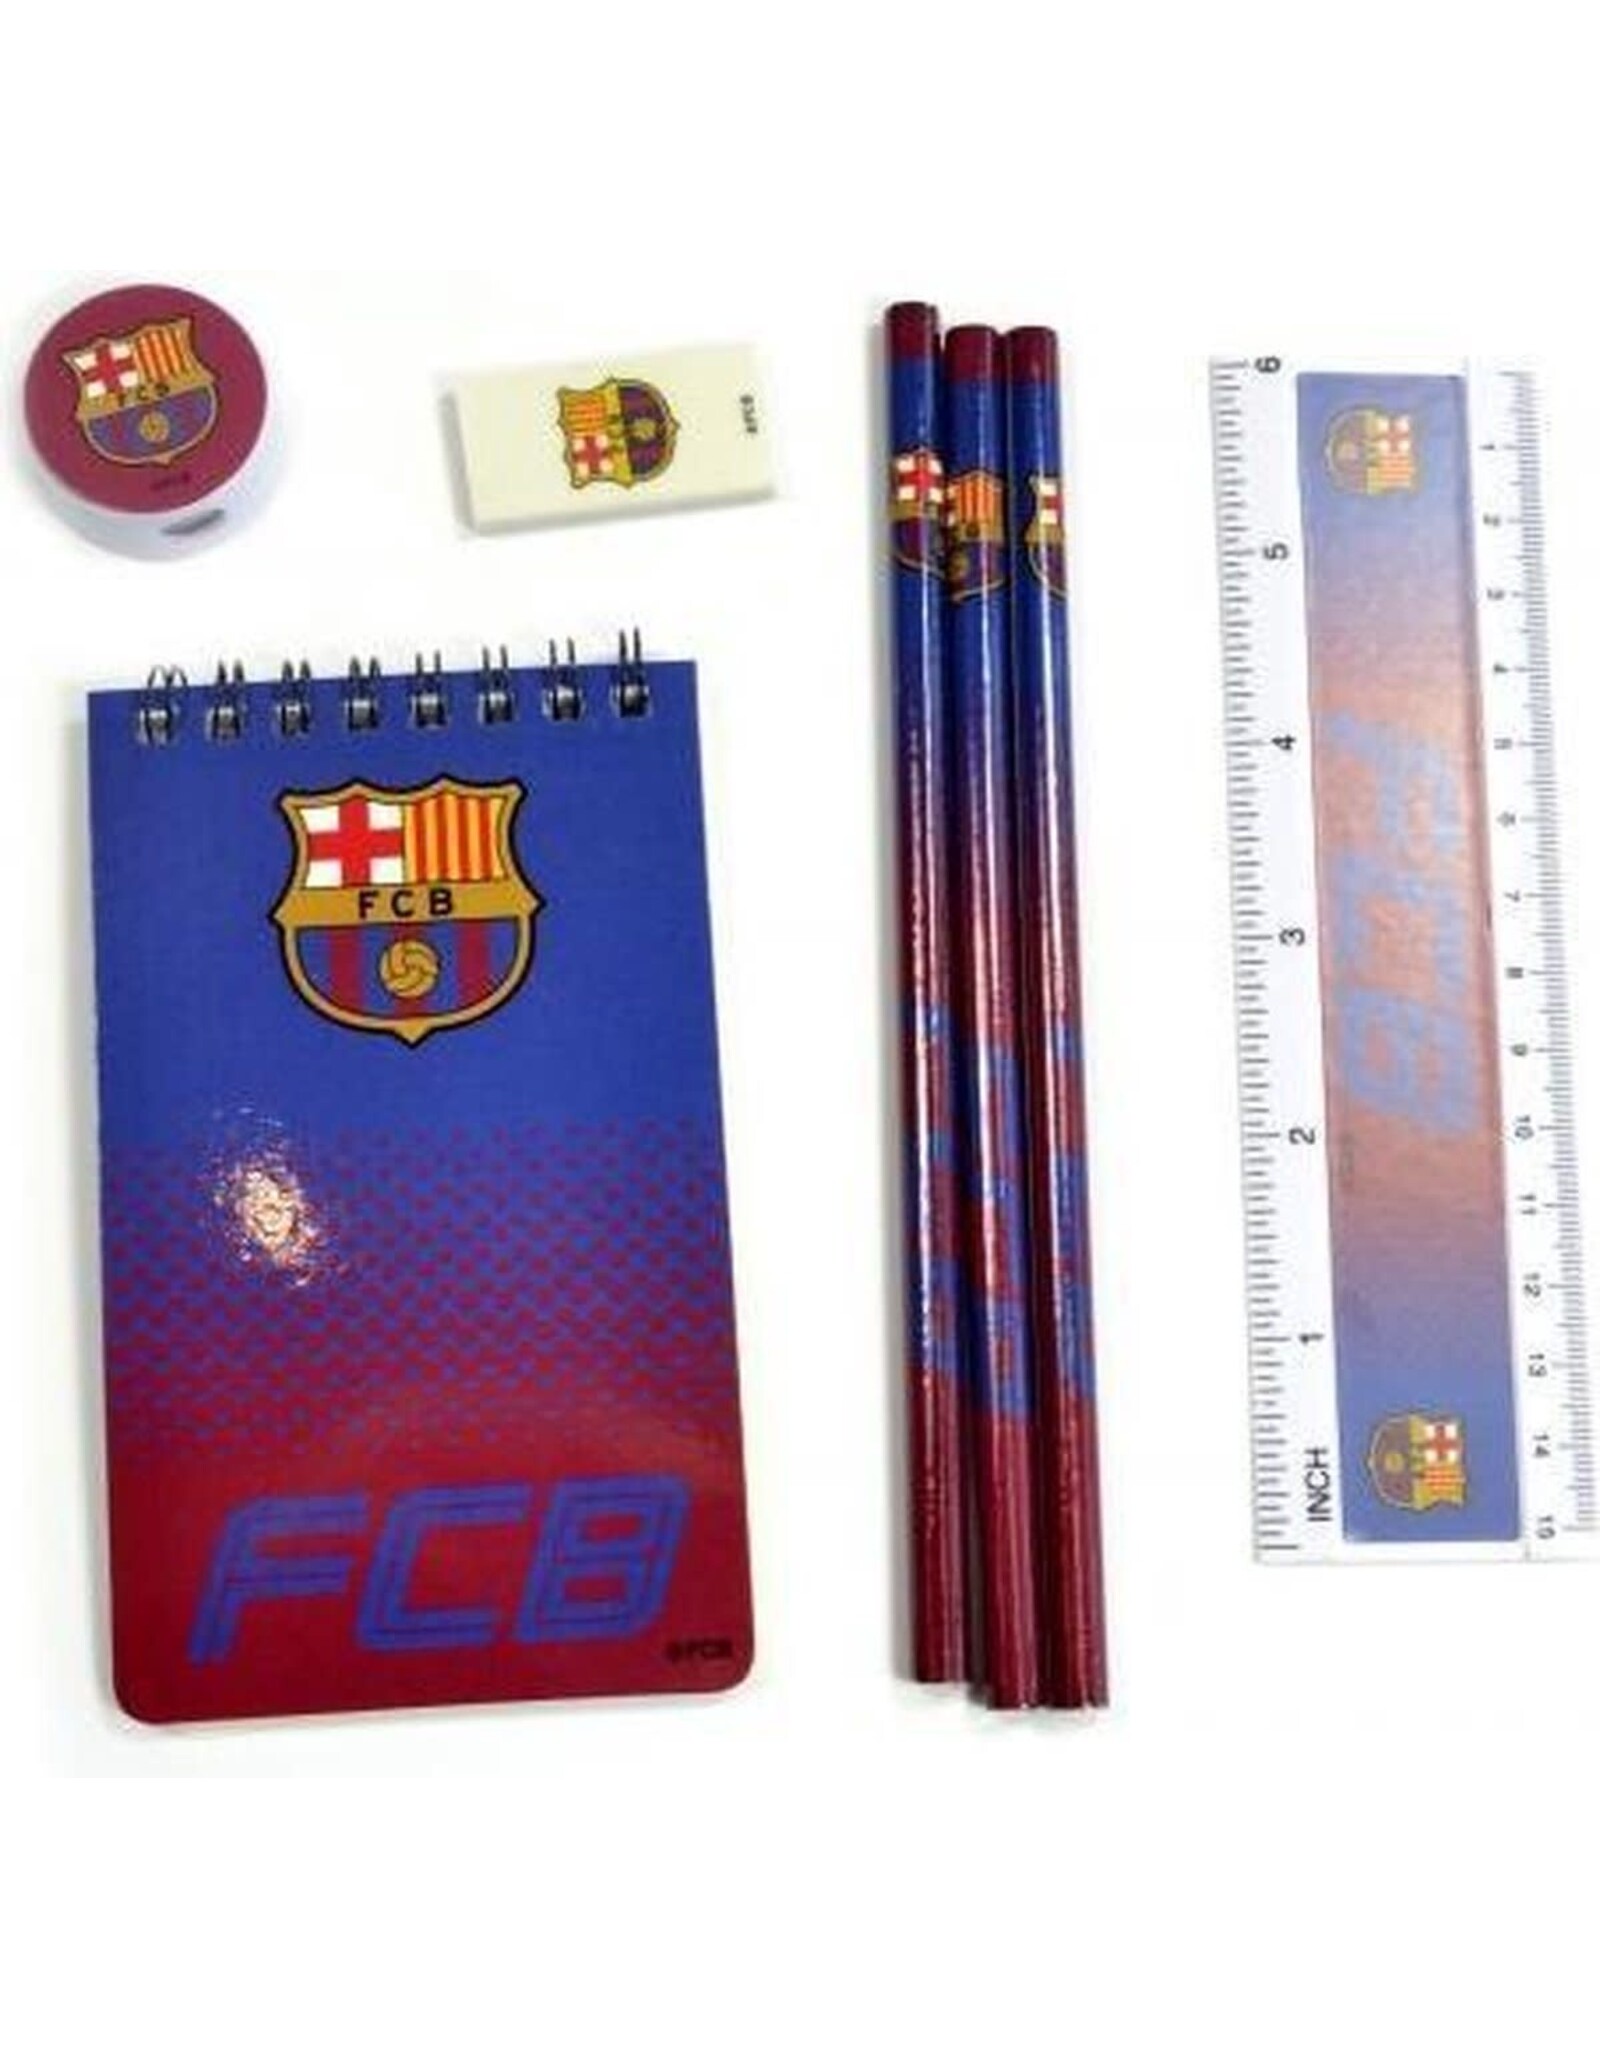 FC Barcelona Stationary Set